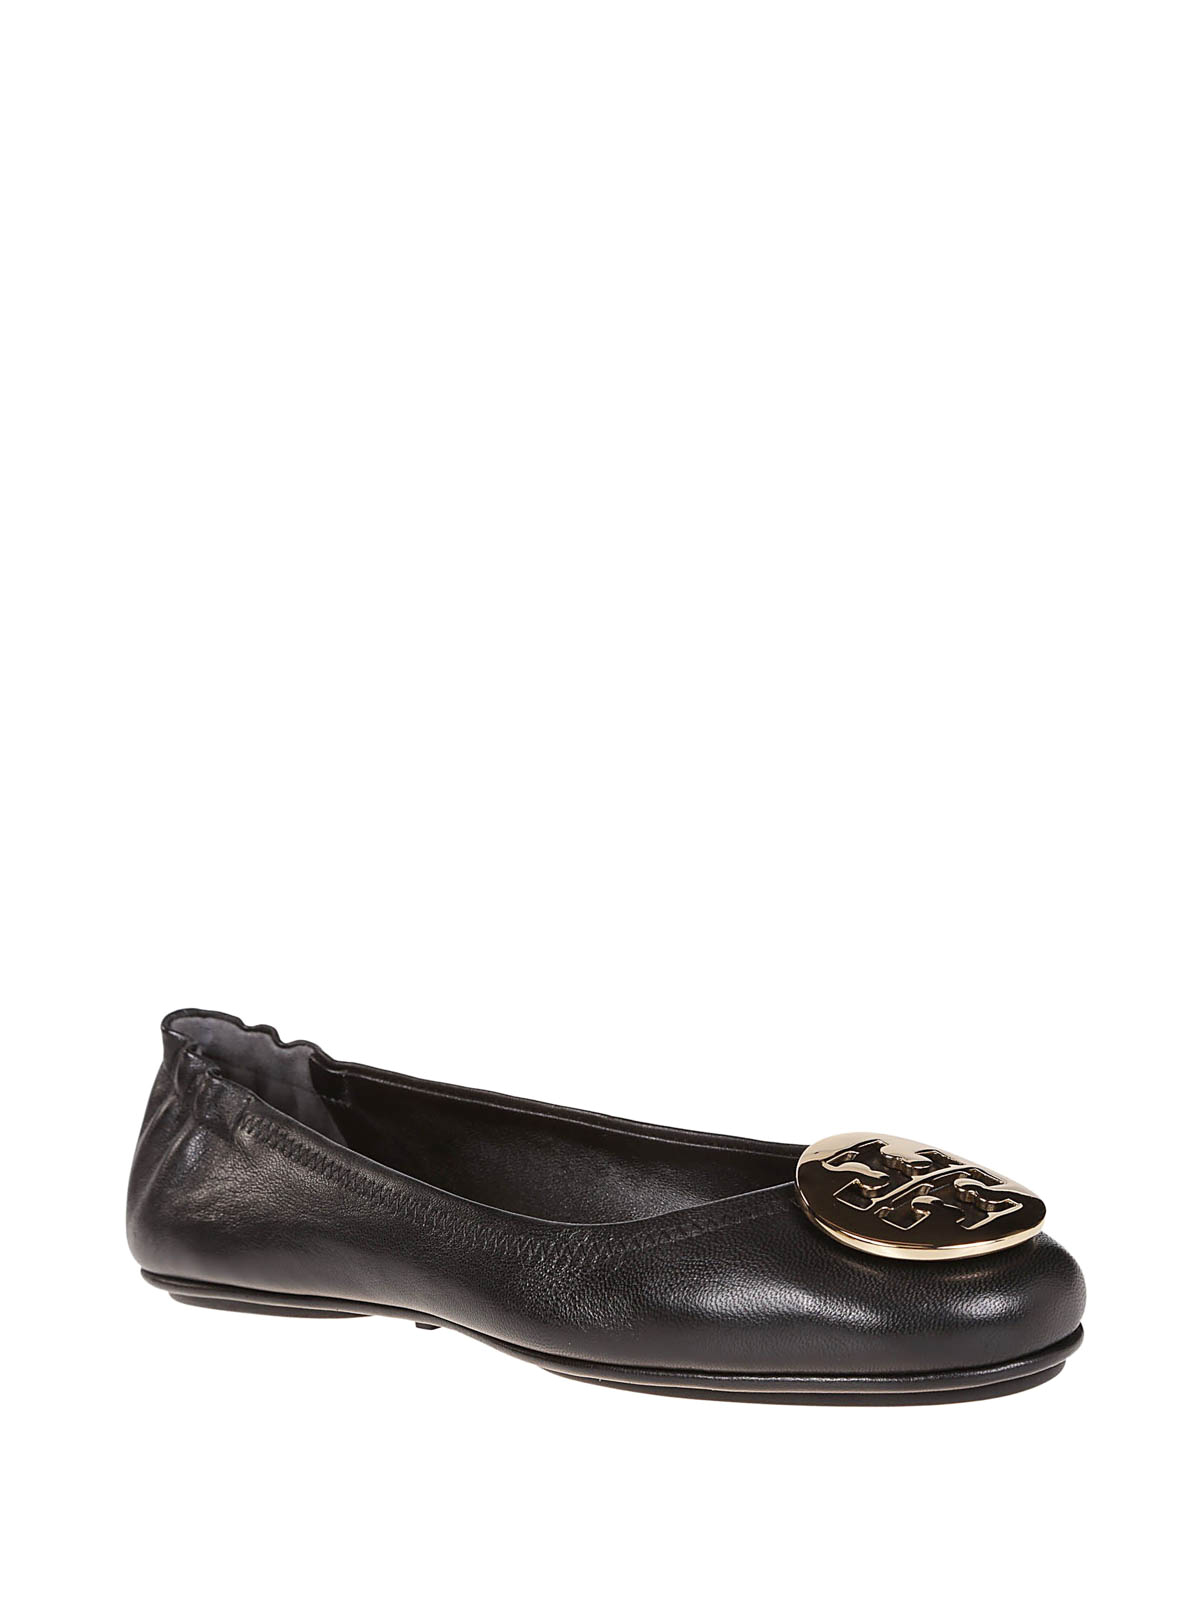 Tory Burch - Minnie Travel black leather folding flats - flat shoes ...